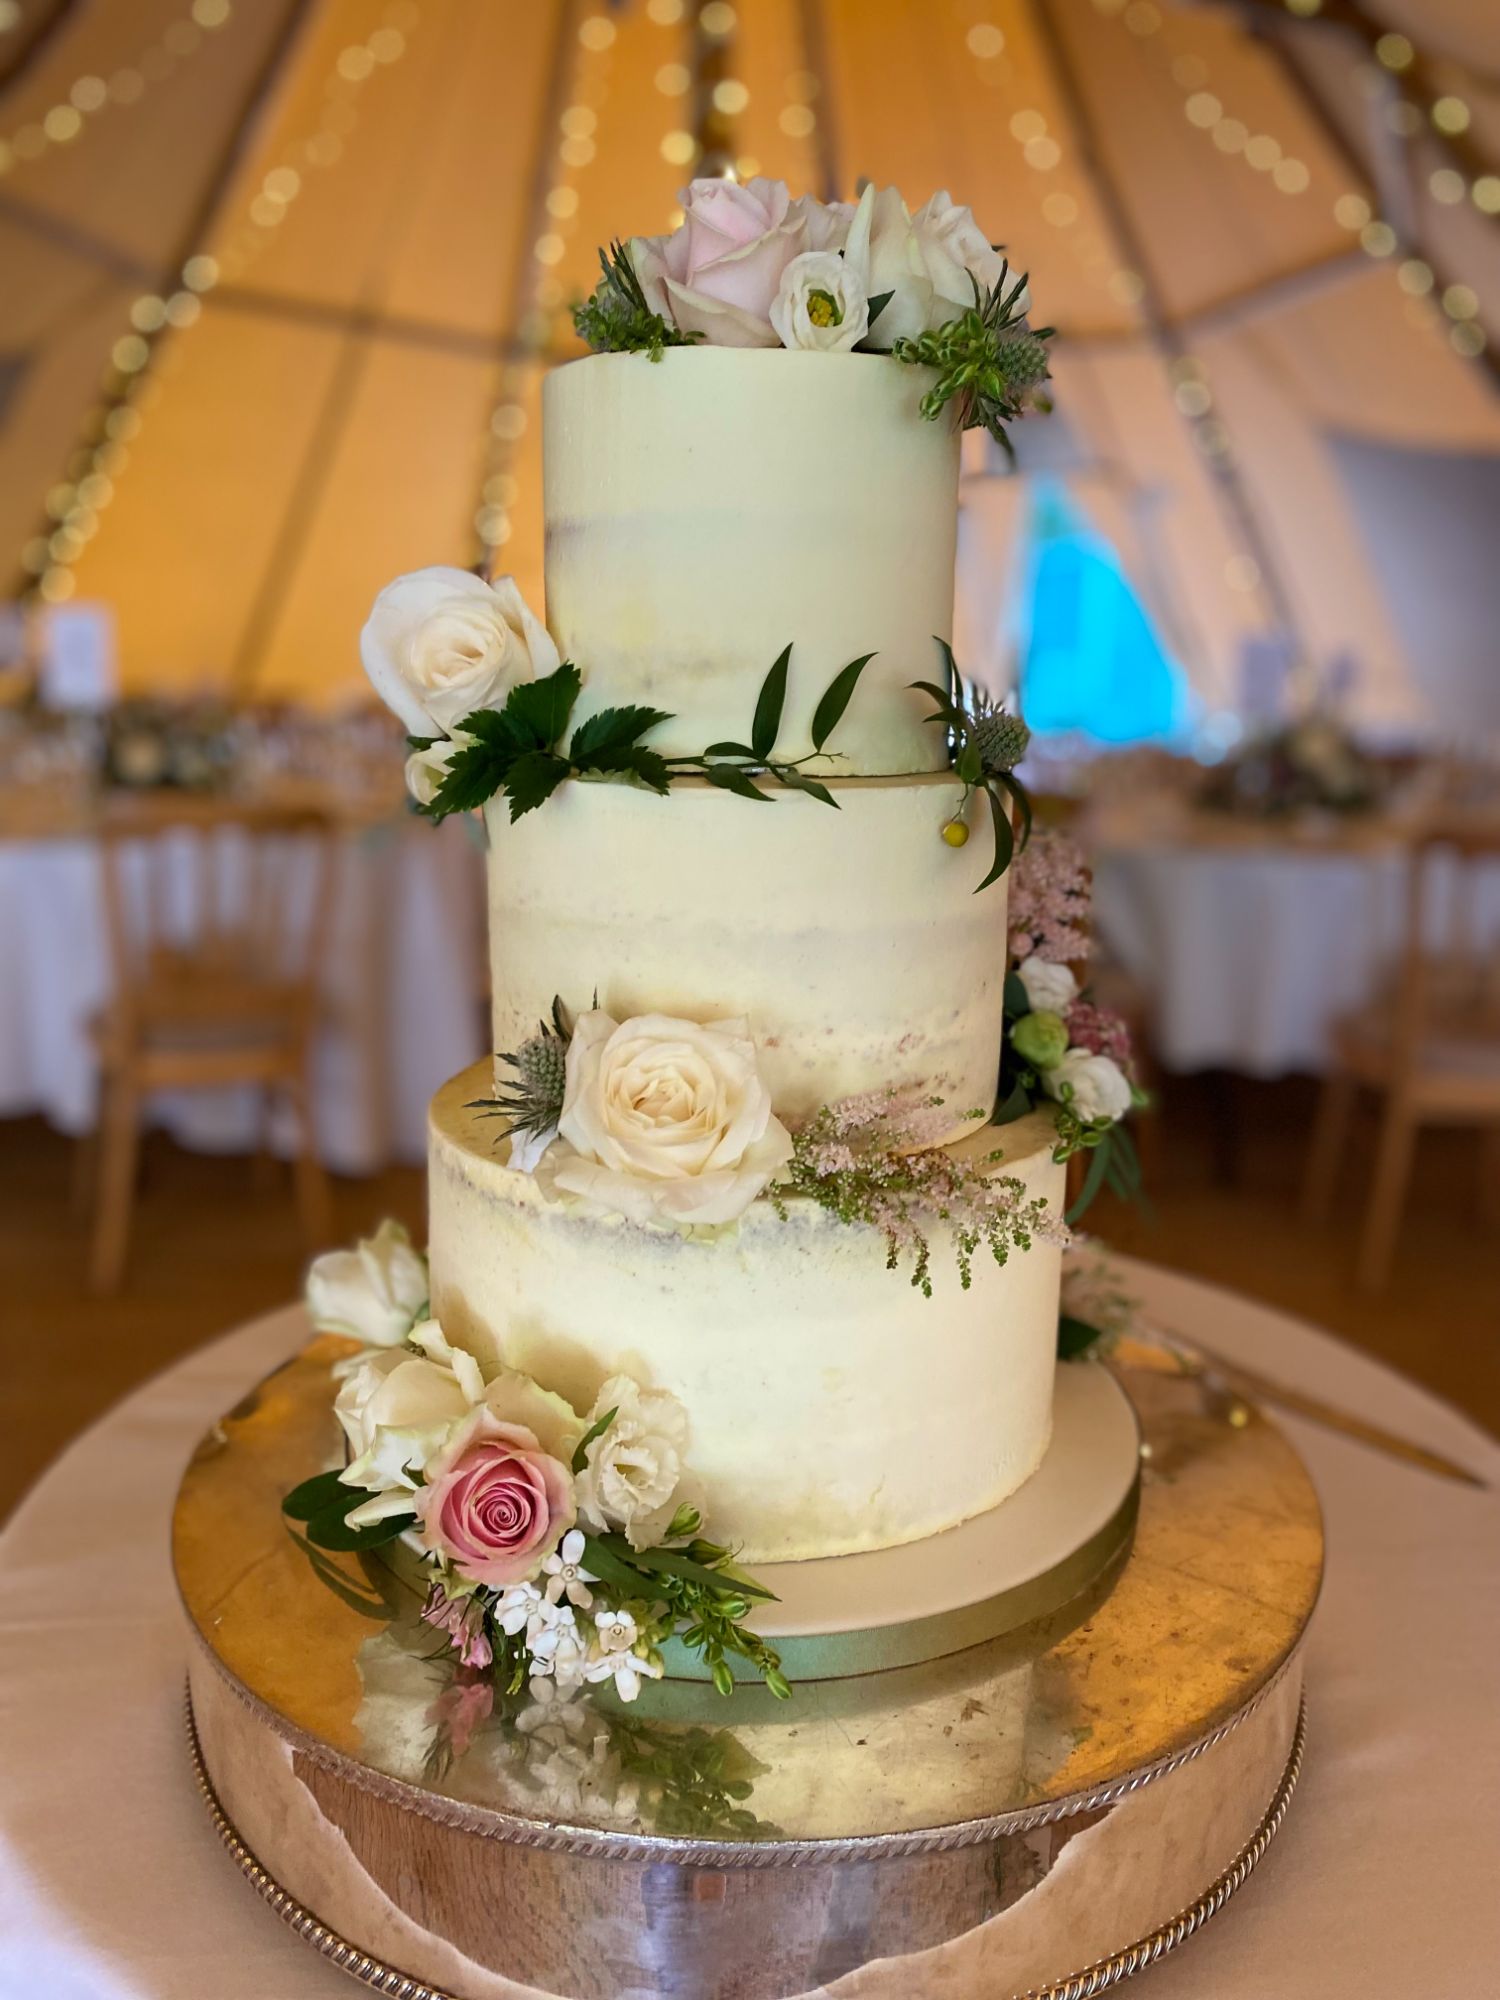 Helen Jane Cake Design, Christchurch, Dorset - wedding cakes (25)